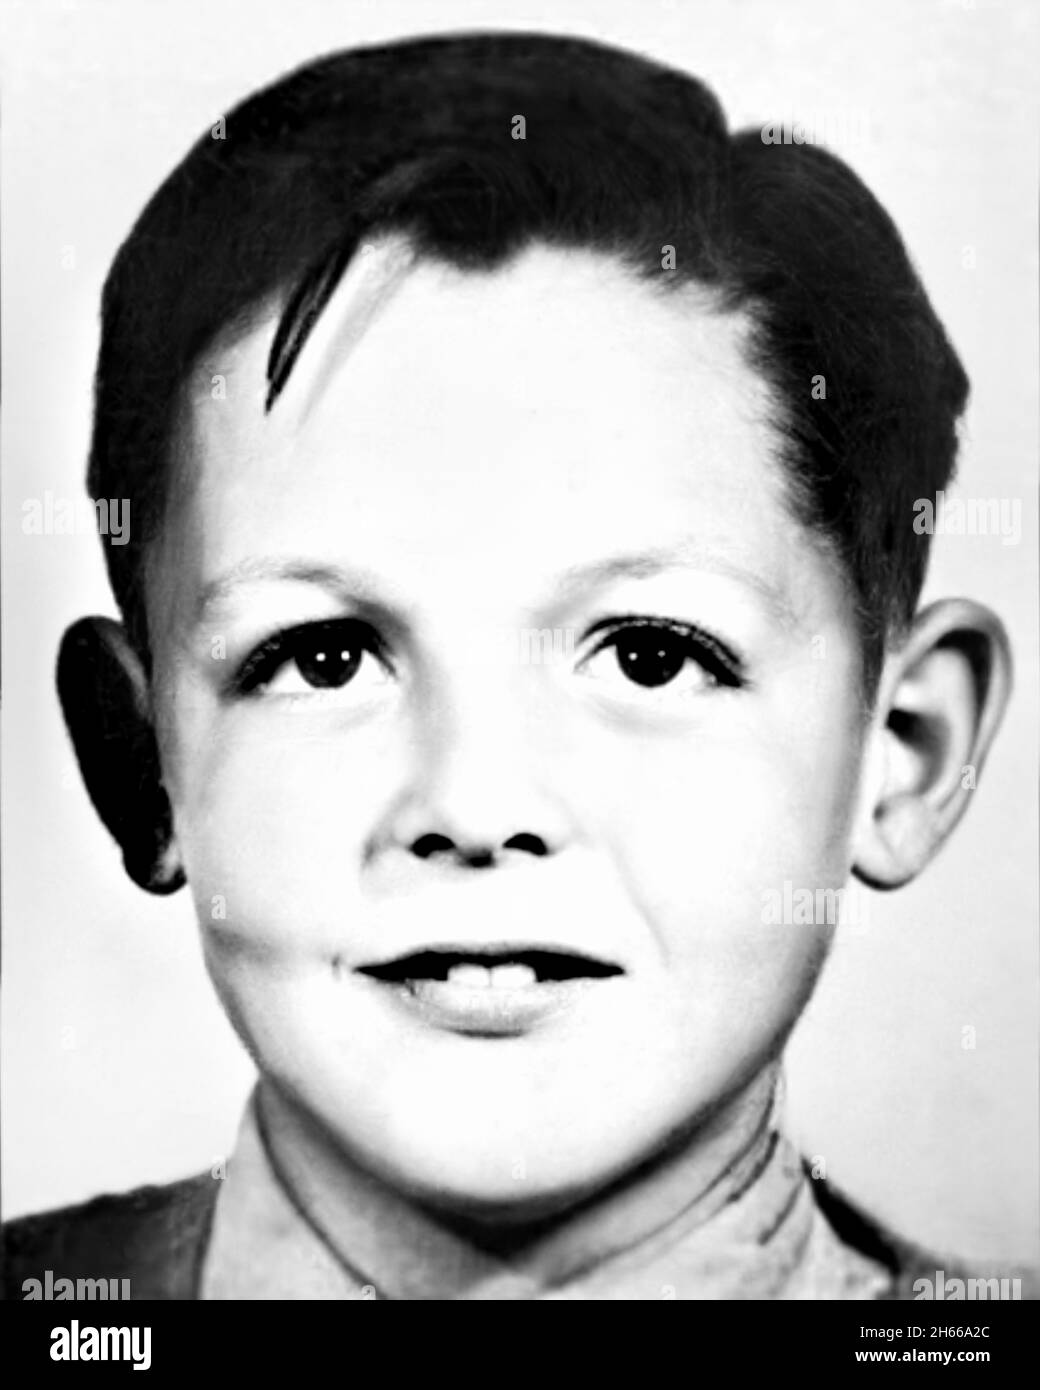 1950 , LIVERPOOL , GREAT BRITAIN : The celebrated british Rock Star singer and composer Sir PAUL McCARTNEY  ( born 18 june 1942 ), of THE BEATLES , when was a young boy aged 8 . Unknown photographer. - HISTORY - FOTO STORICHE - personalità da bambino bambini da giovane - personality personalities when was young  - INFANZIA - CHILDHOOD - BAMBINO - BABY - BAMBINI - CHILDREN - CHILD - ROCK' Roll - POP MUSIC - MUSICA - cantante - COMPOSITORE - ROCK STAR --- ARCHIVIO GBB Stock Photo